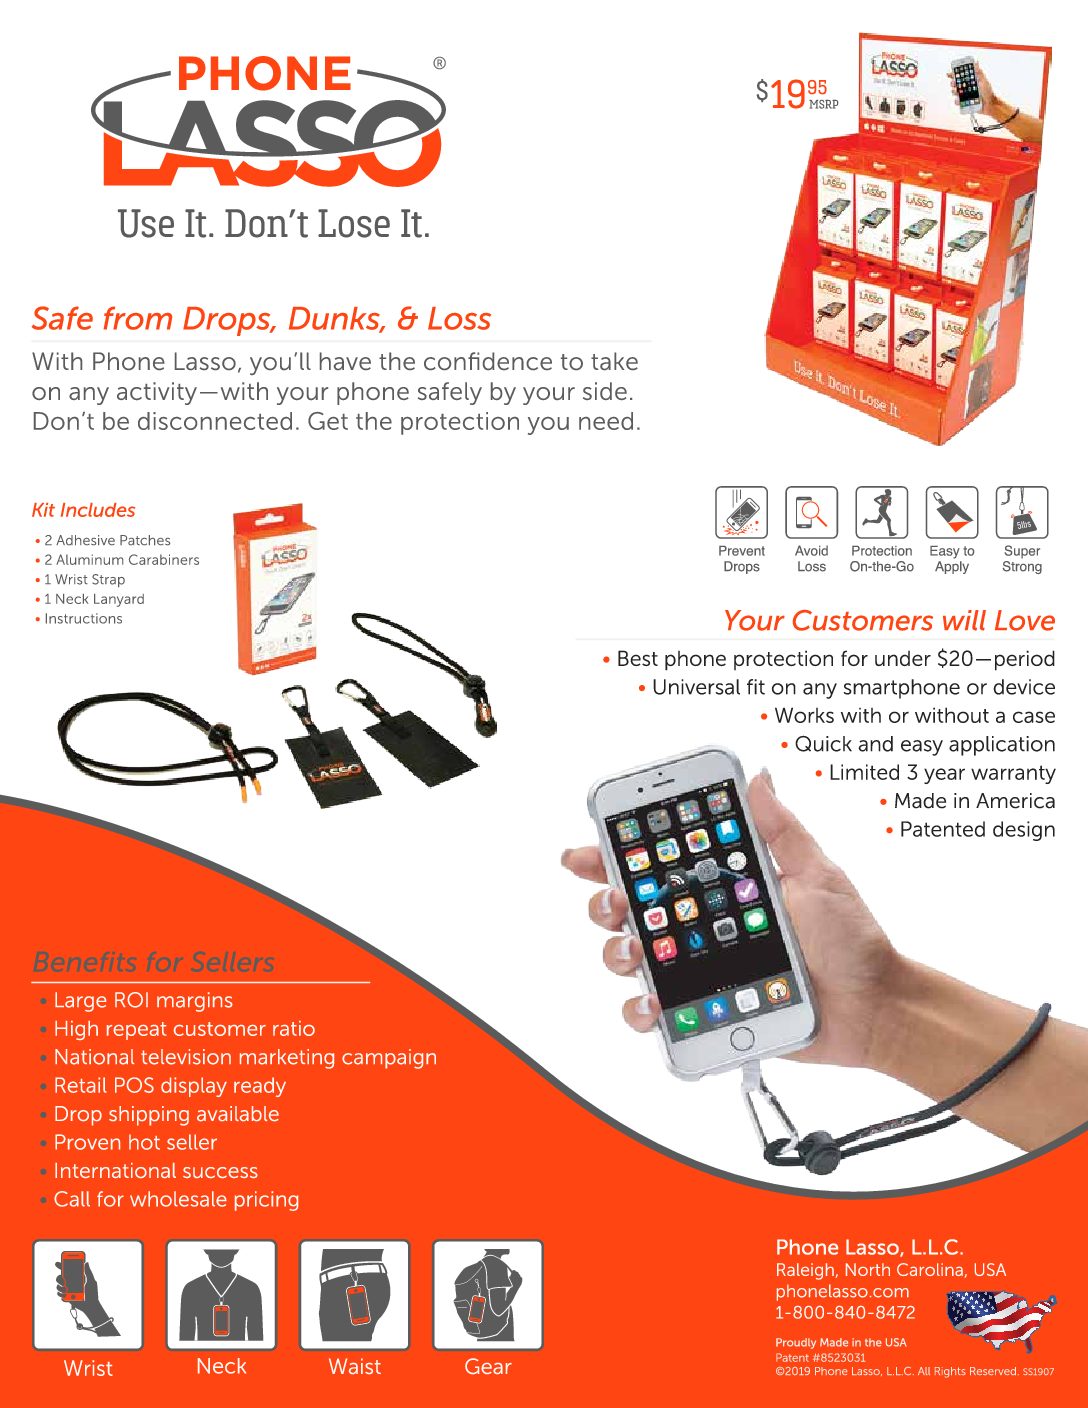 Phone Lasso Sell Sheet (pdf)